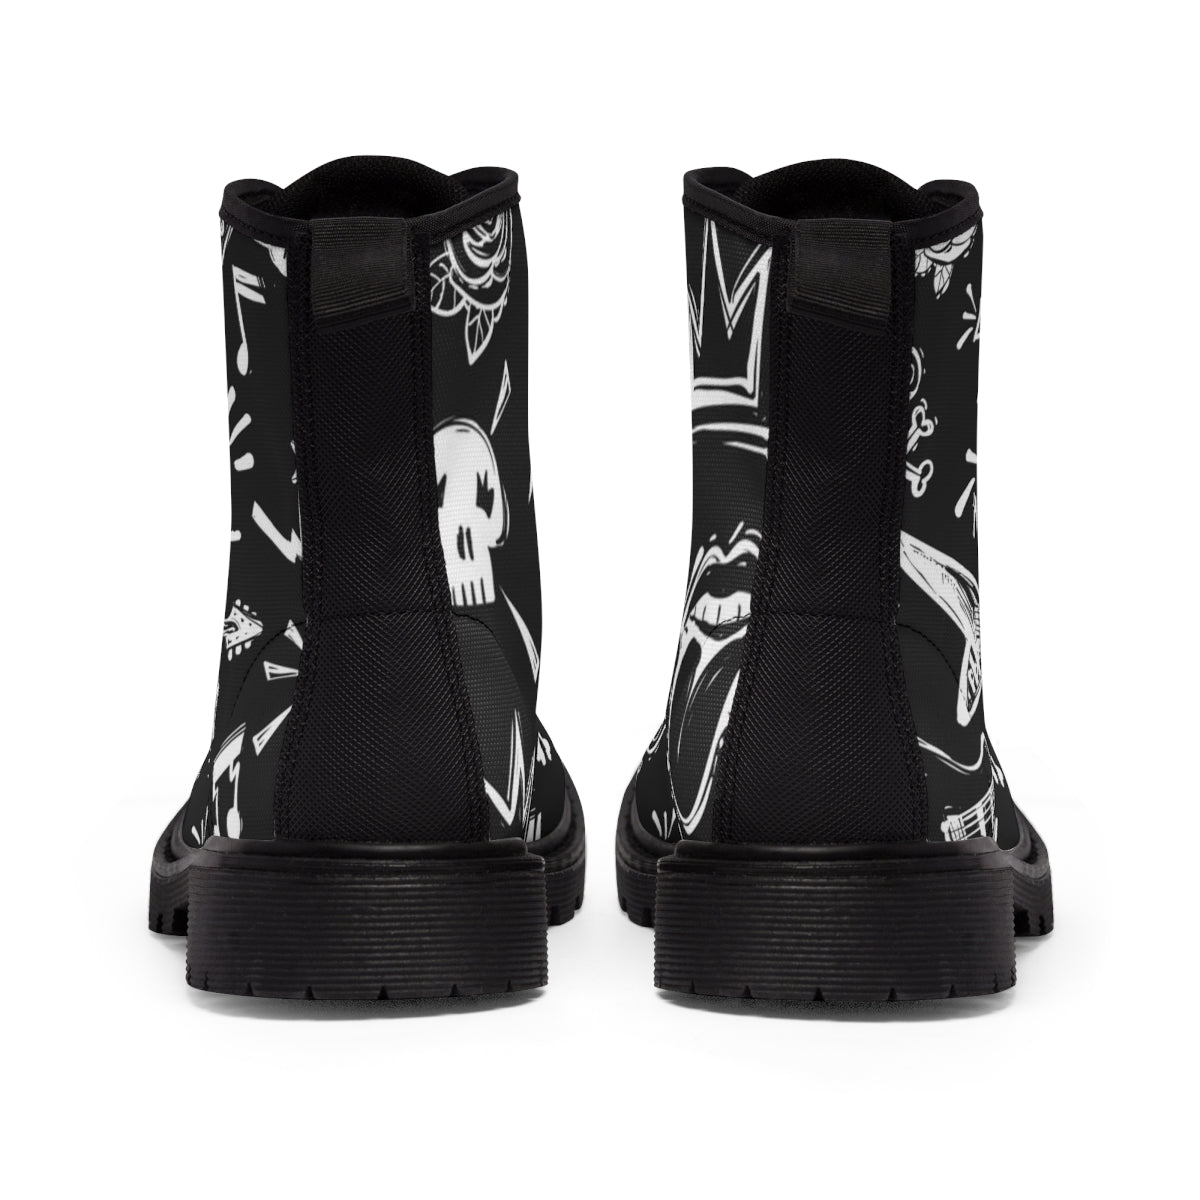 S3X n Rock nRoll - Women's Canvas Boots